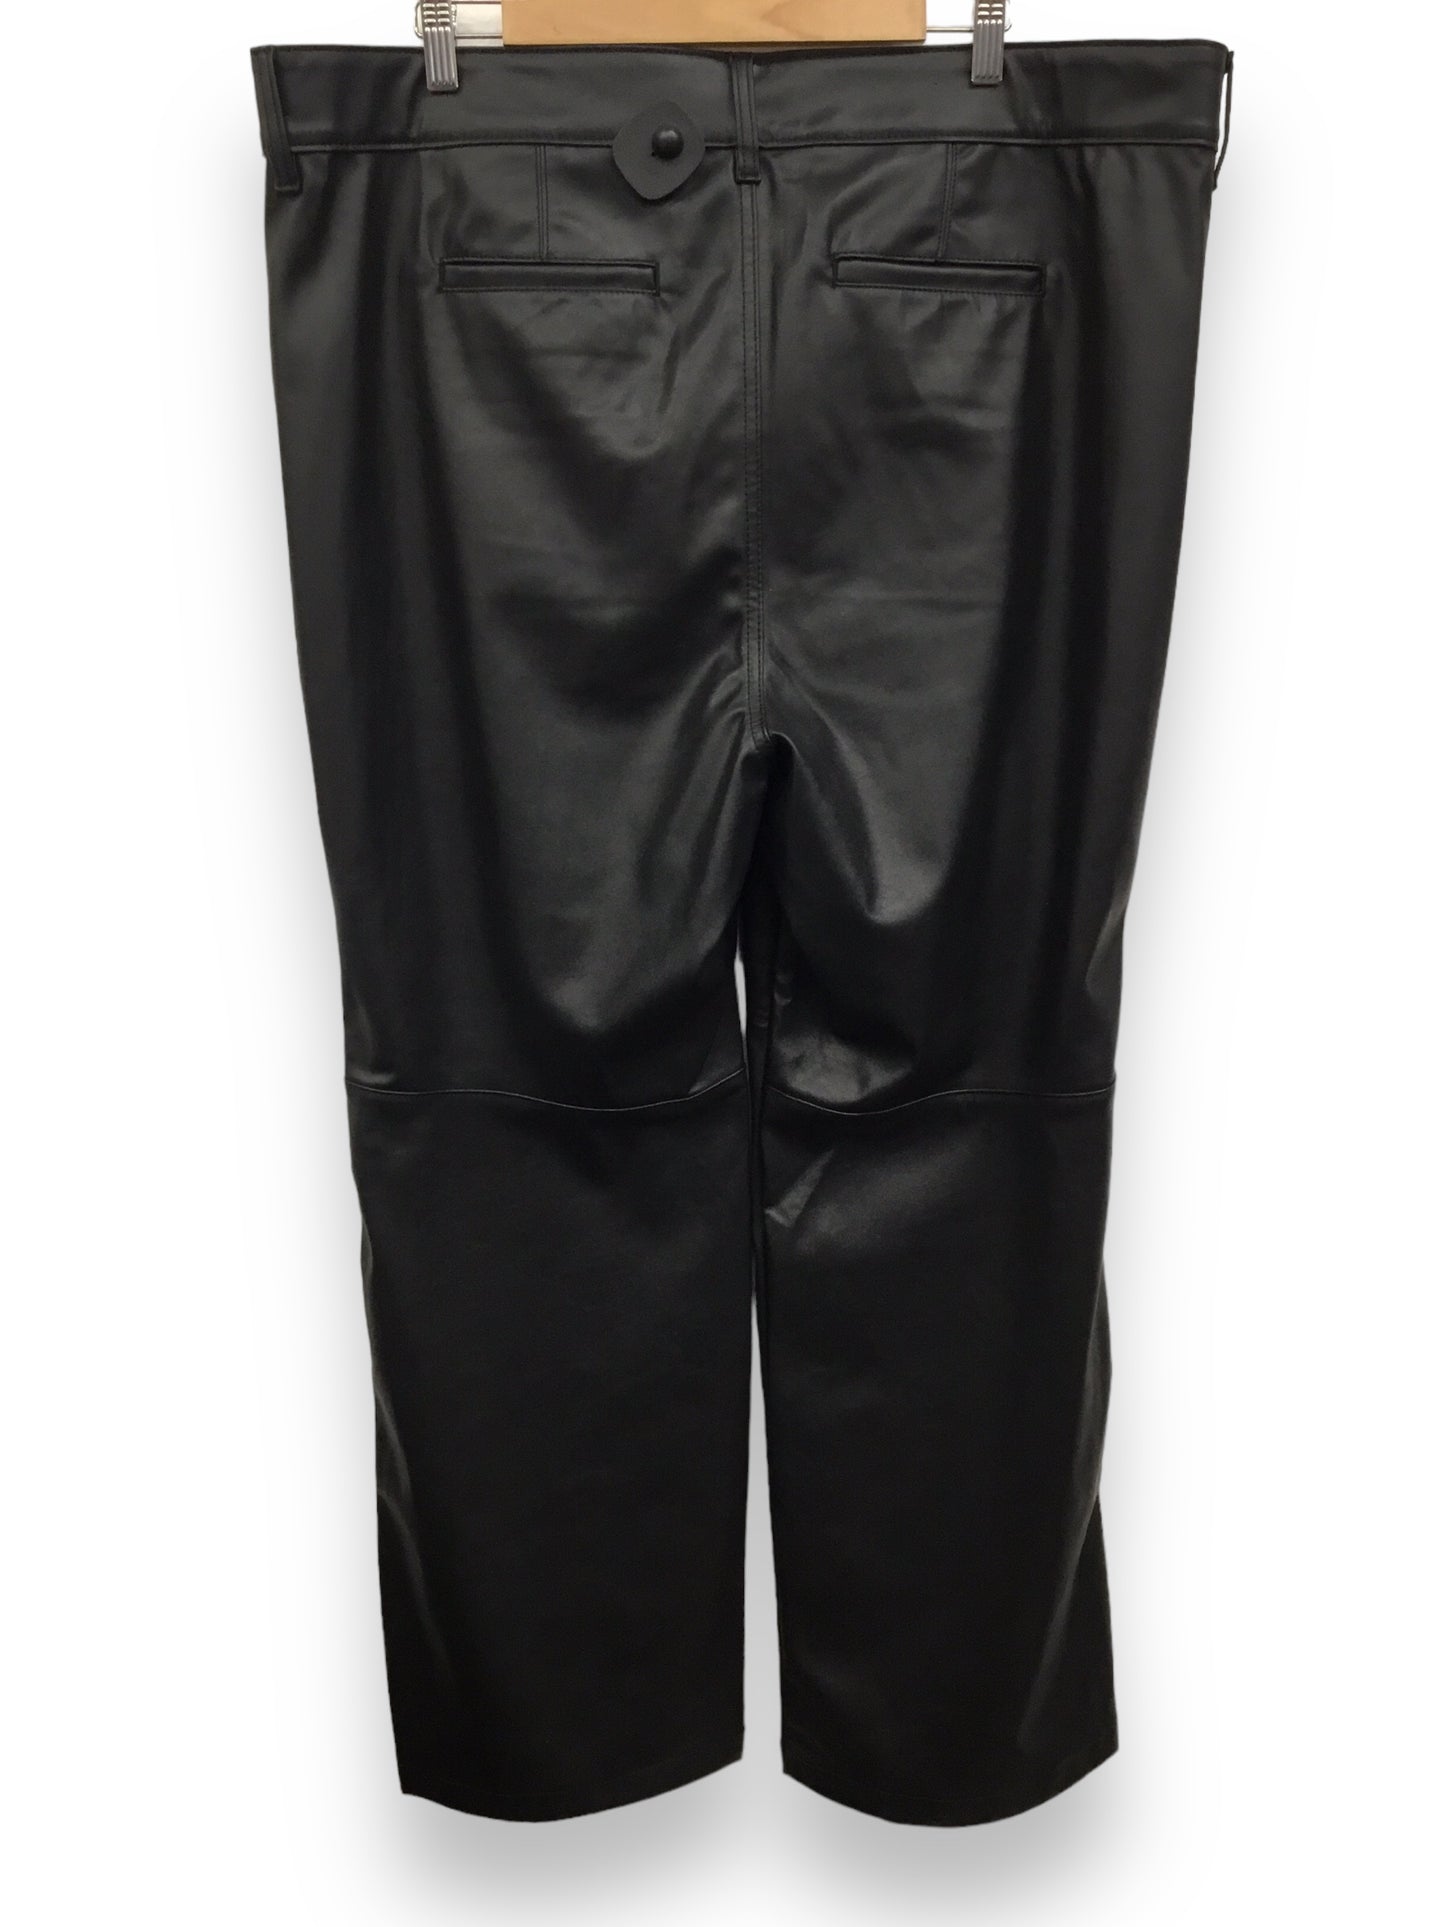 Pants Work/dress By Torrid  Size: 20